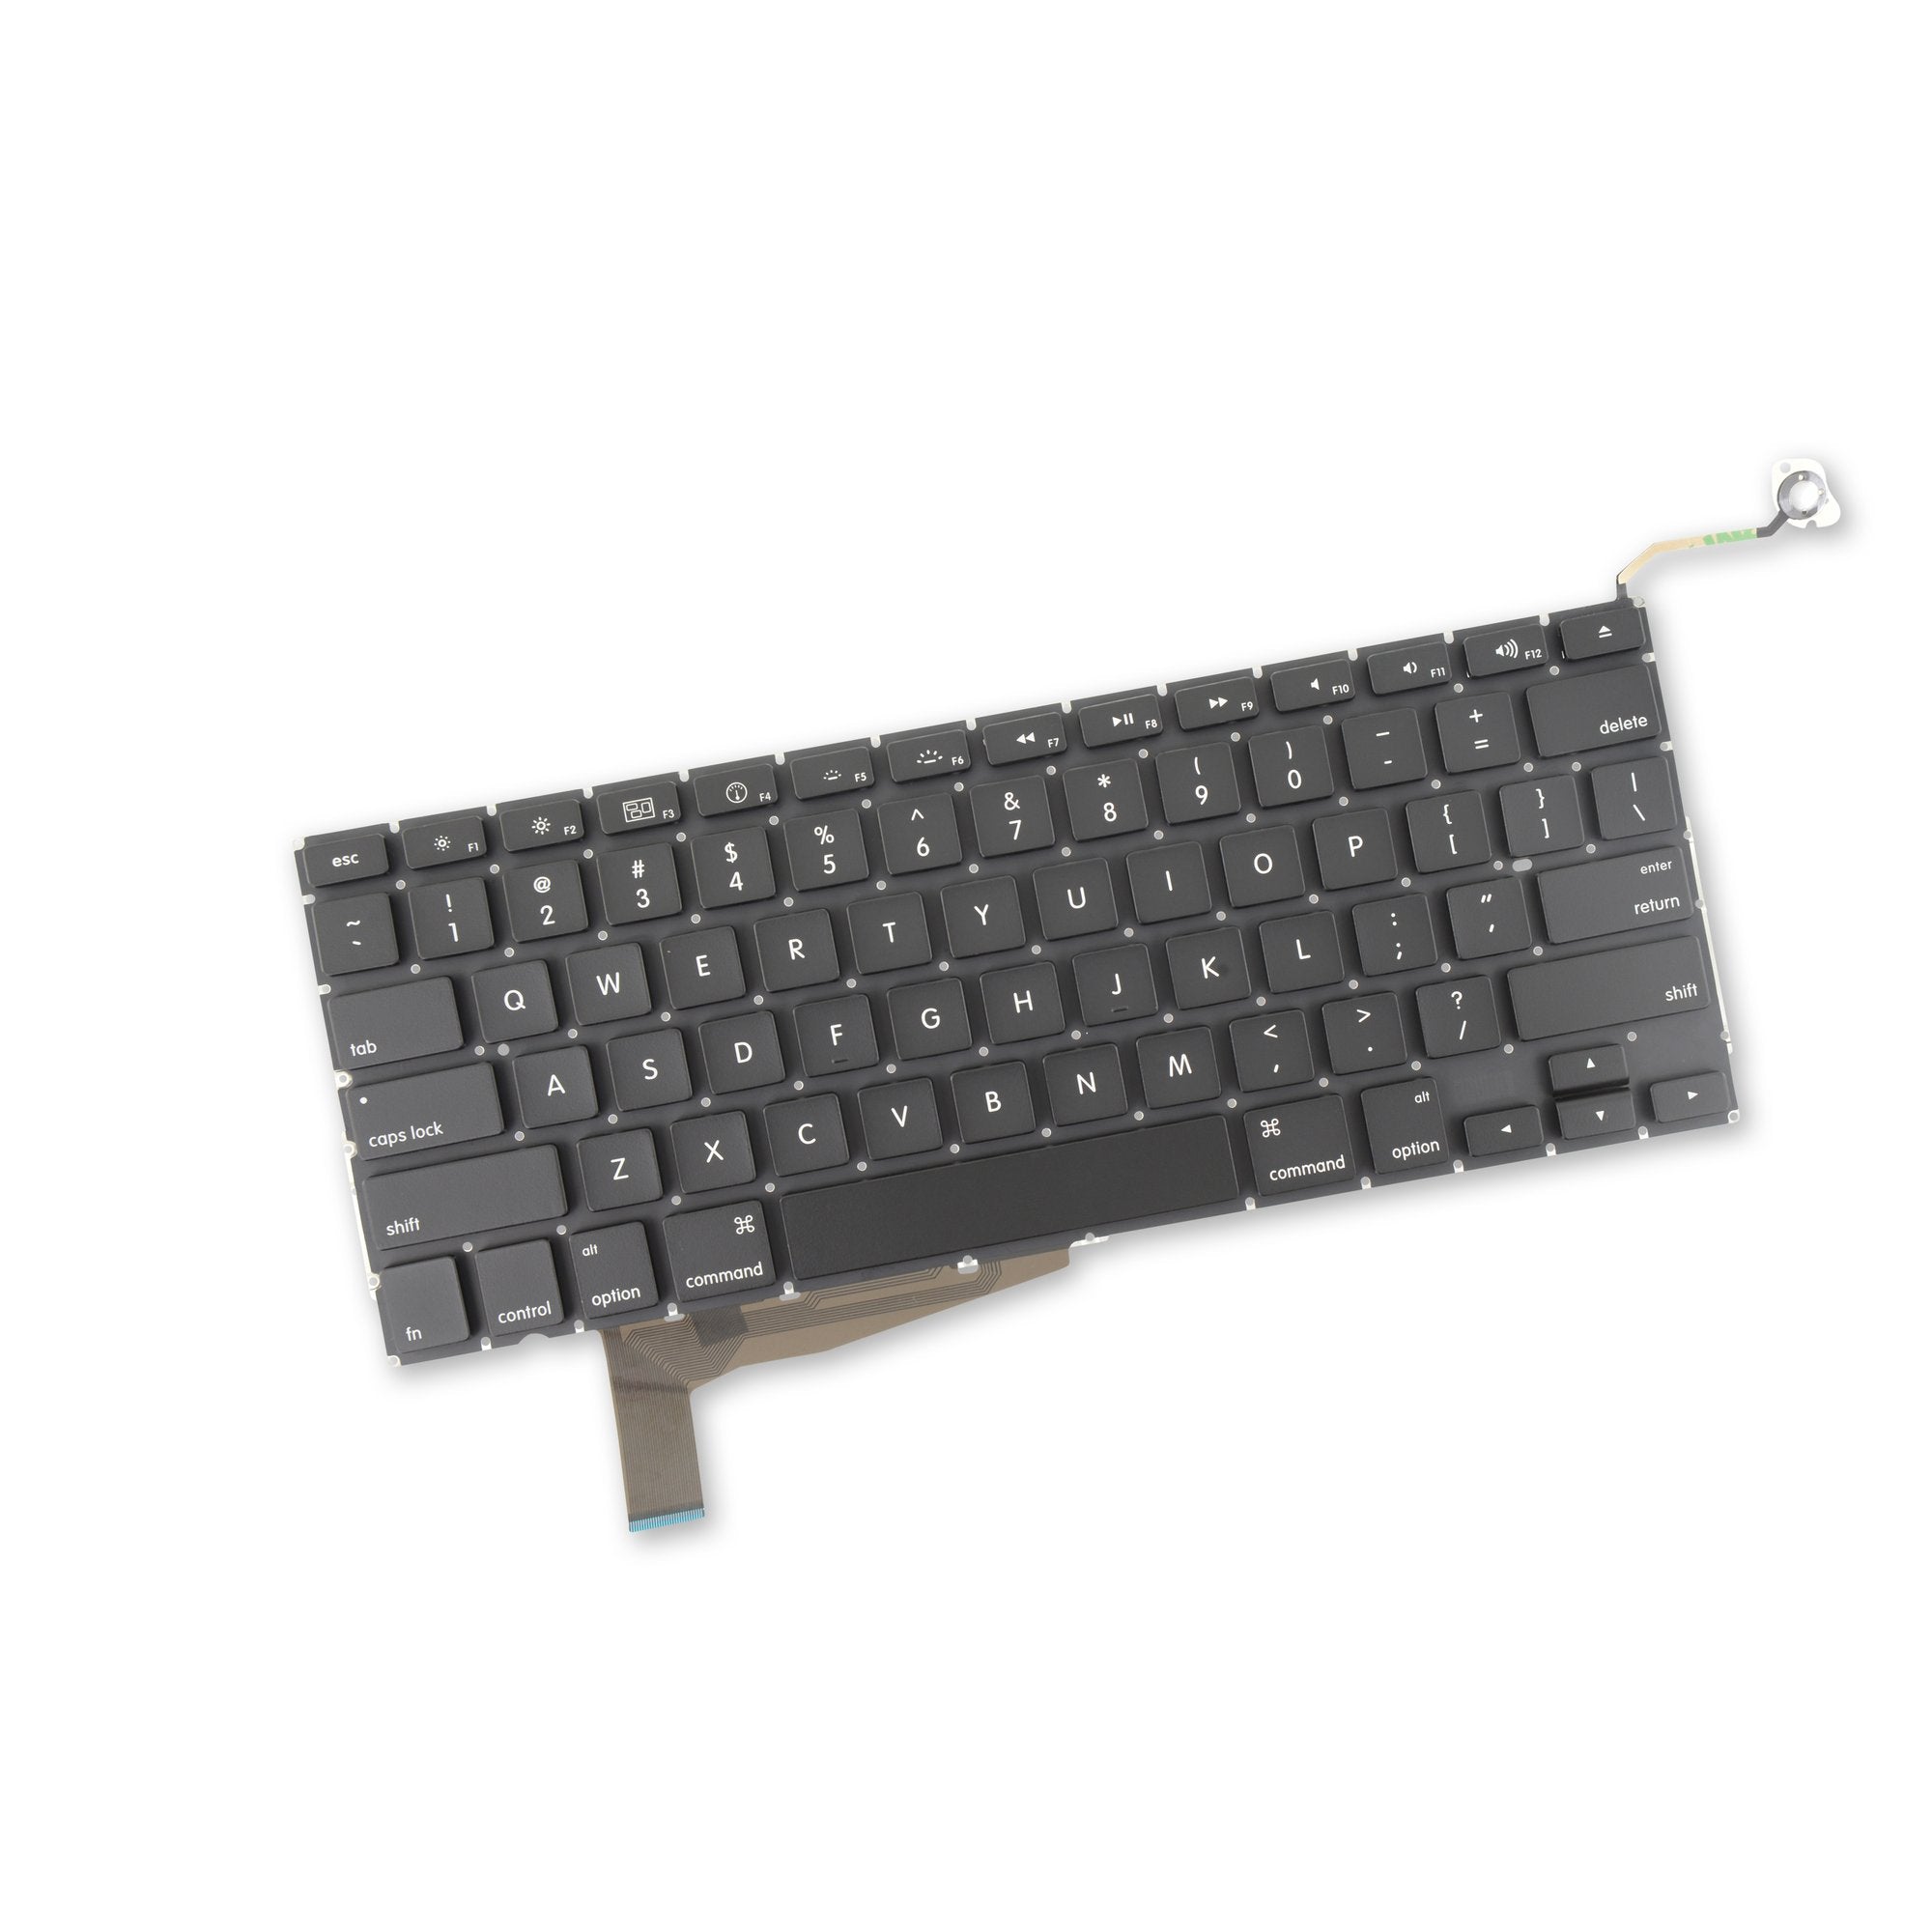 MacBook Pro 15" Unibody (Late 2008-Early 2009) Keyboard